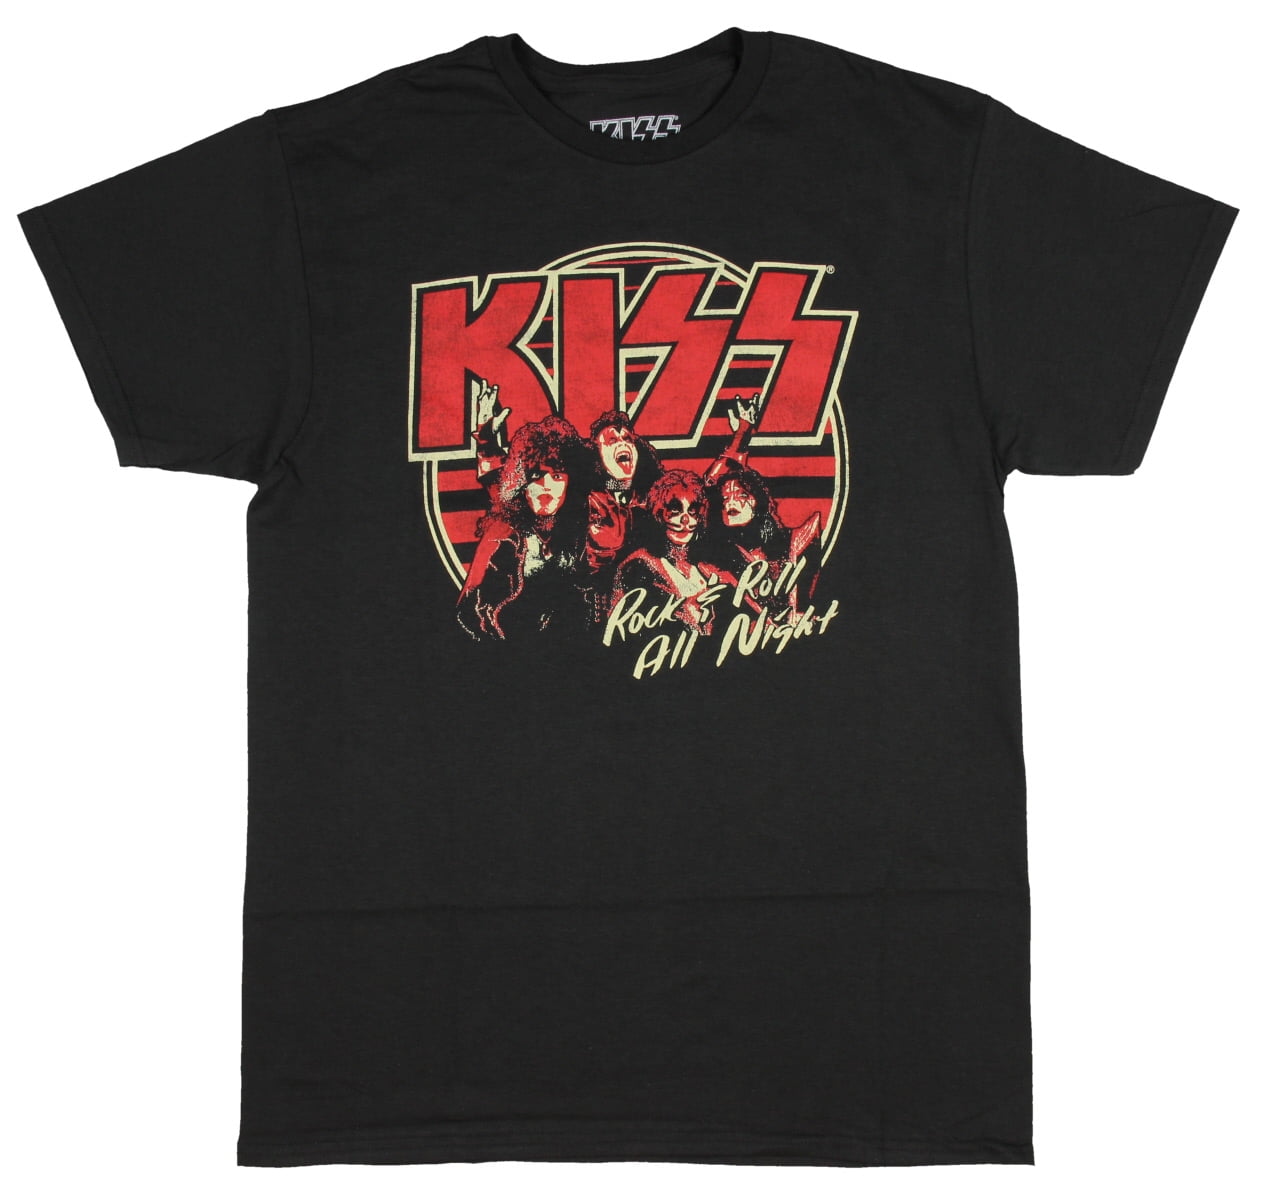 KISS Band Shirt And Roll All Night Graphic Mens' Black Cotton T-Shirt (Medium) - Walmart.com